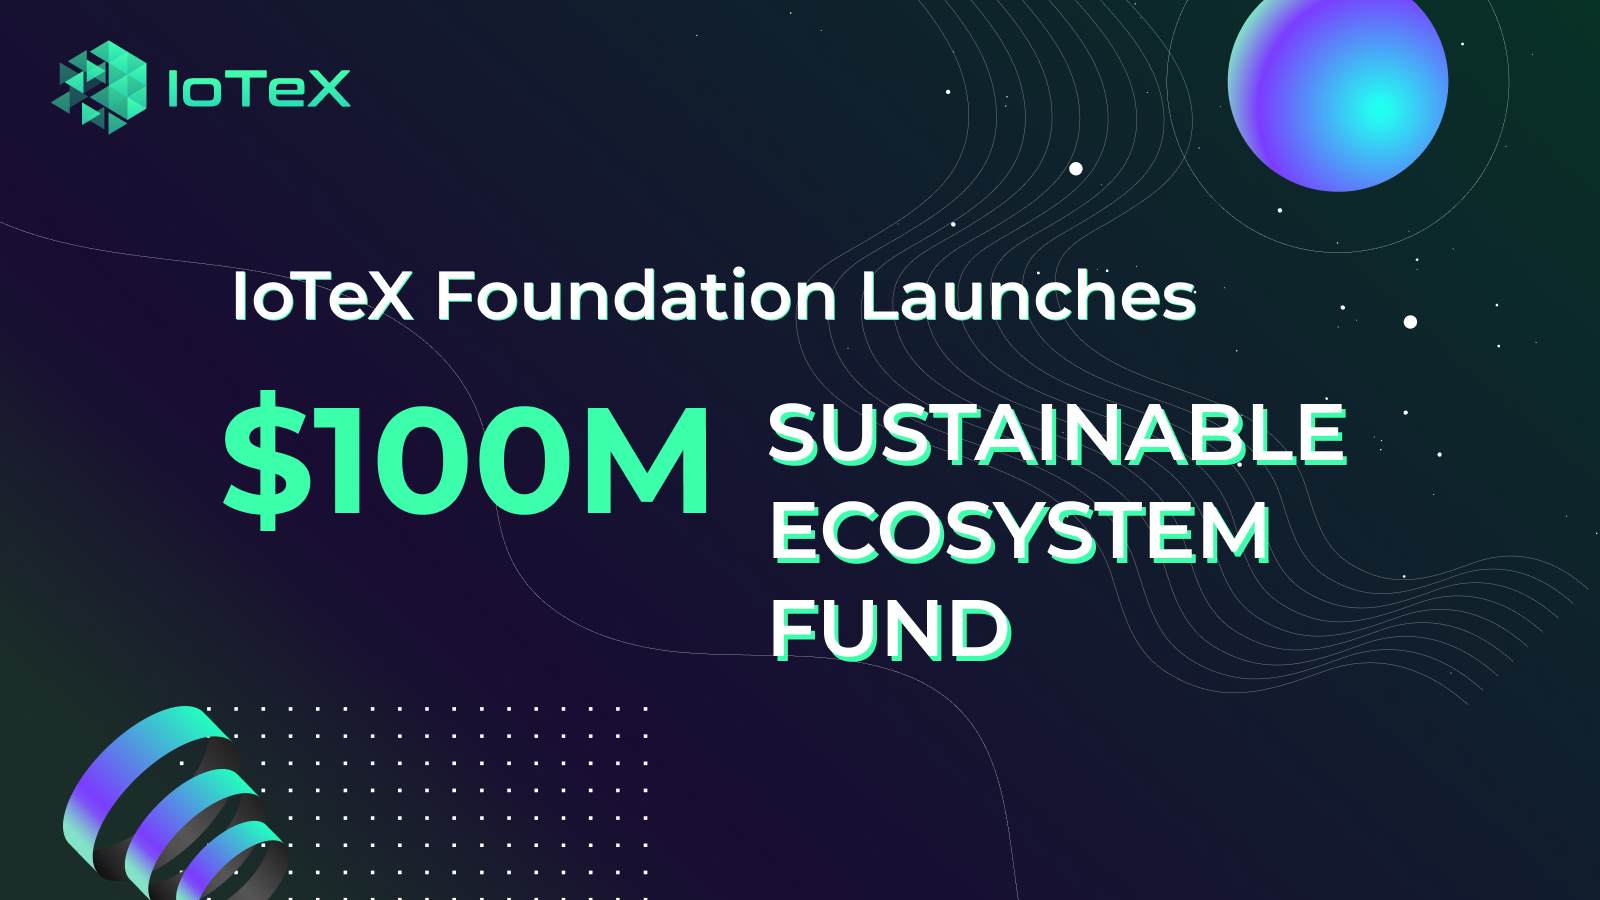 fondation iotex